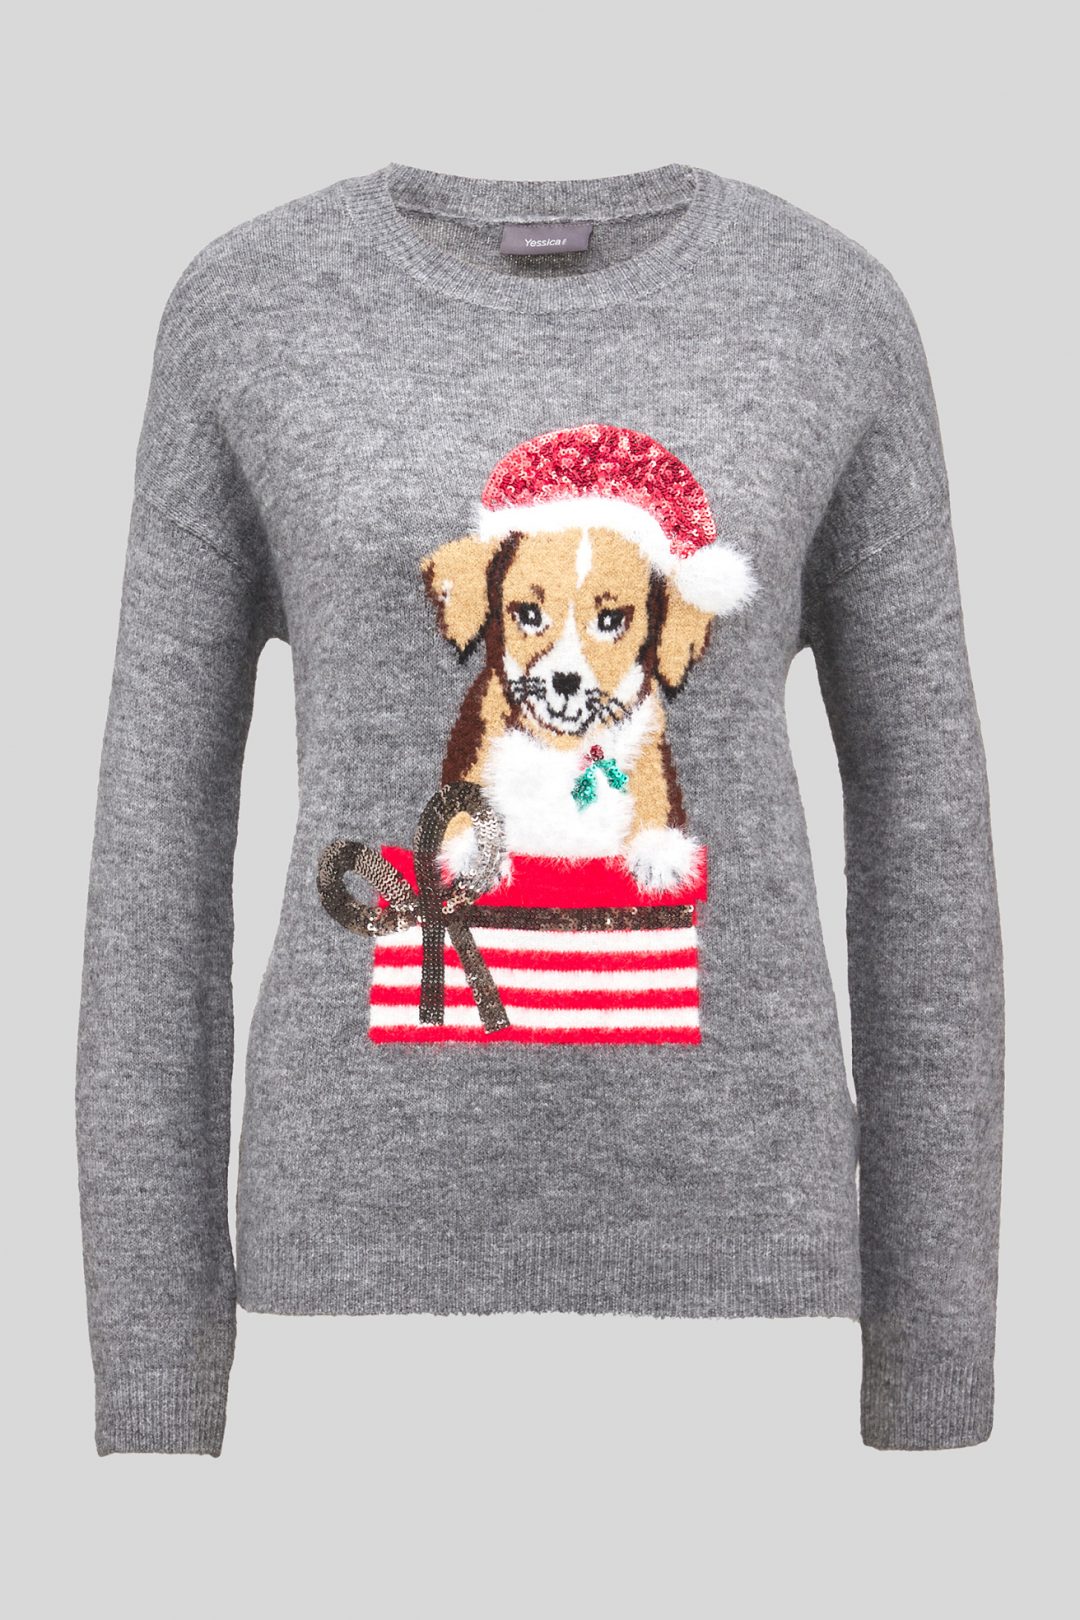 C&A božićni pulover